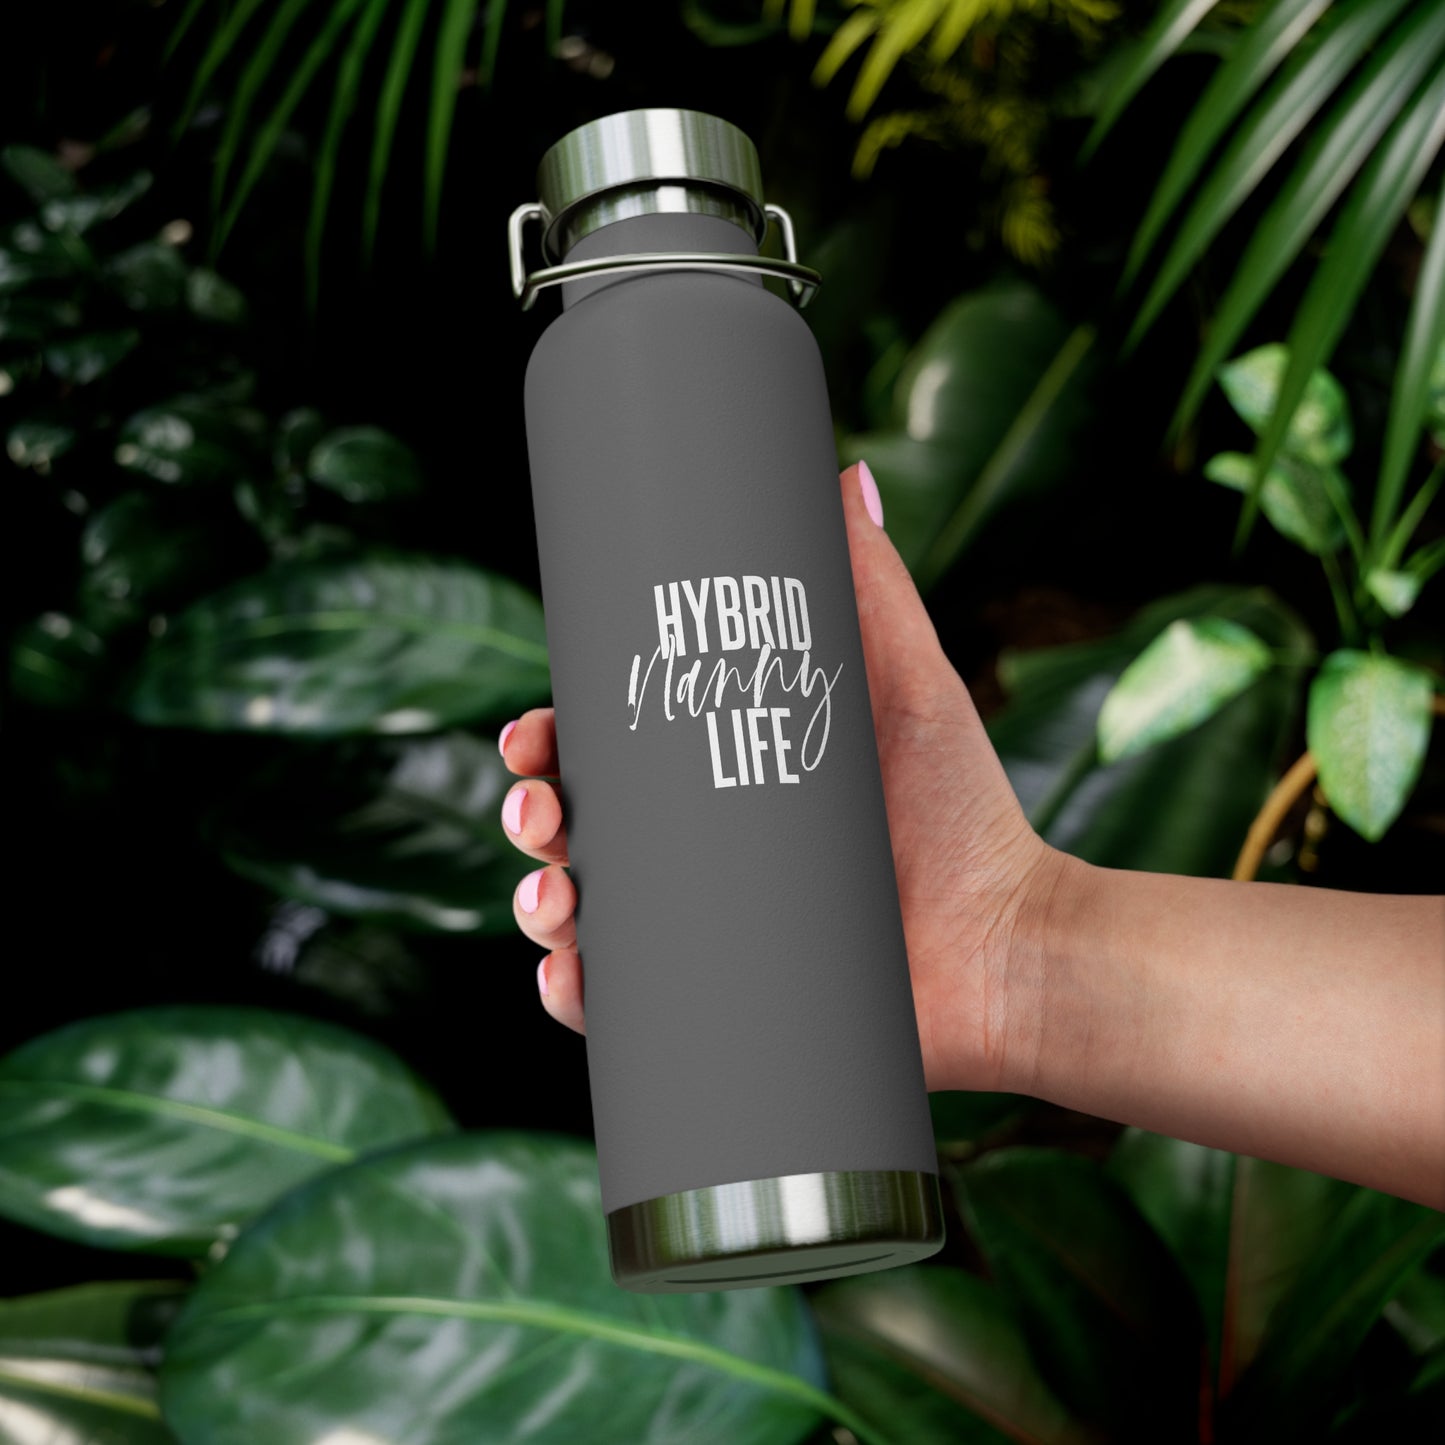 "Hybrid Nanny Life" Copper Vacuum Insulated Bottle, 22oz